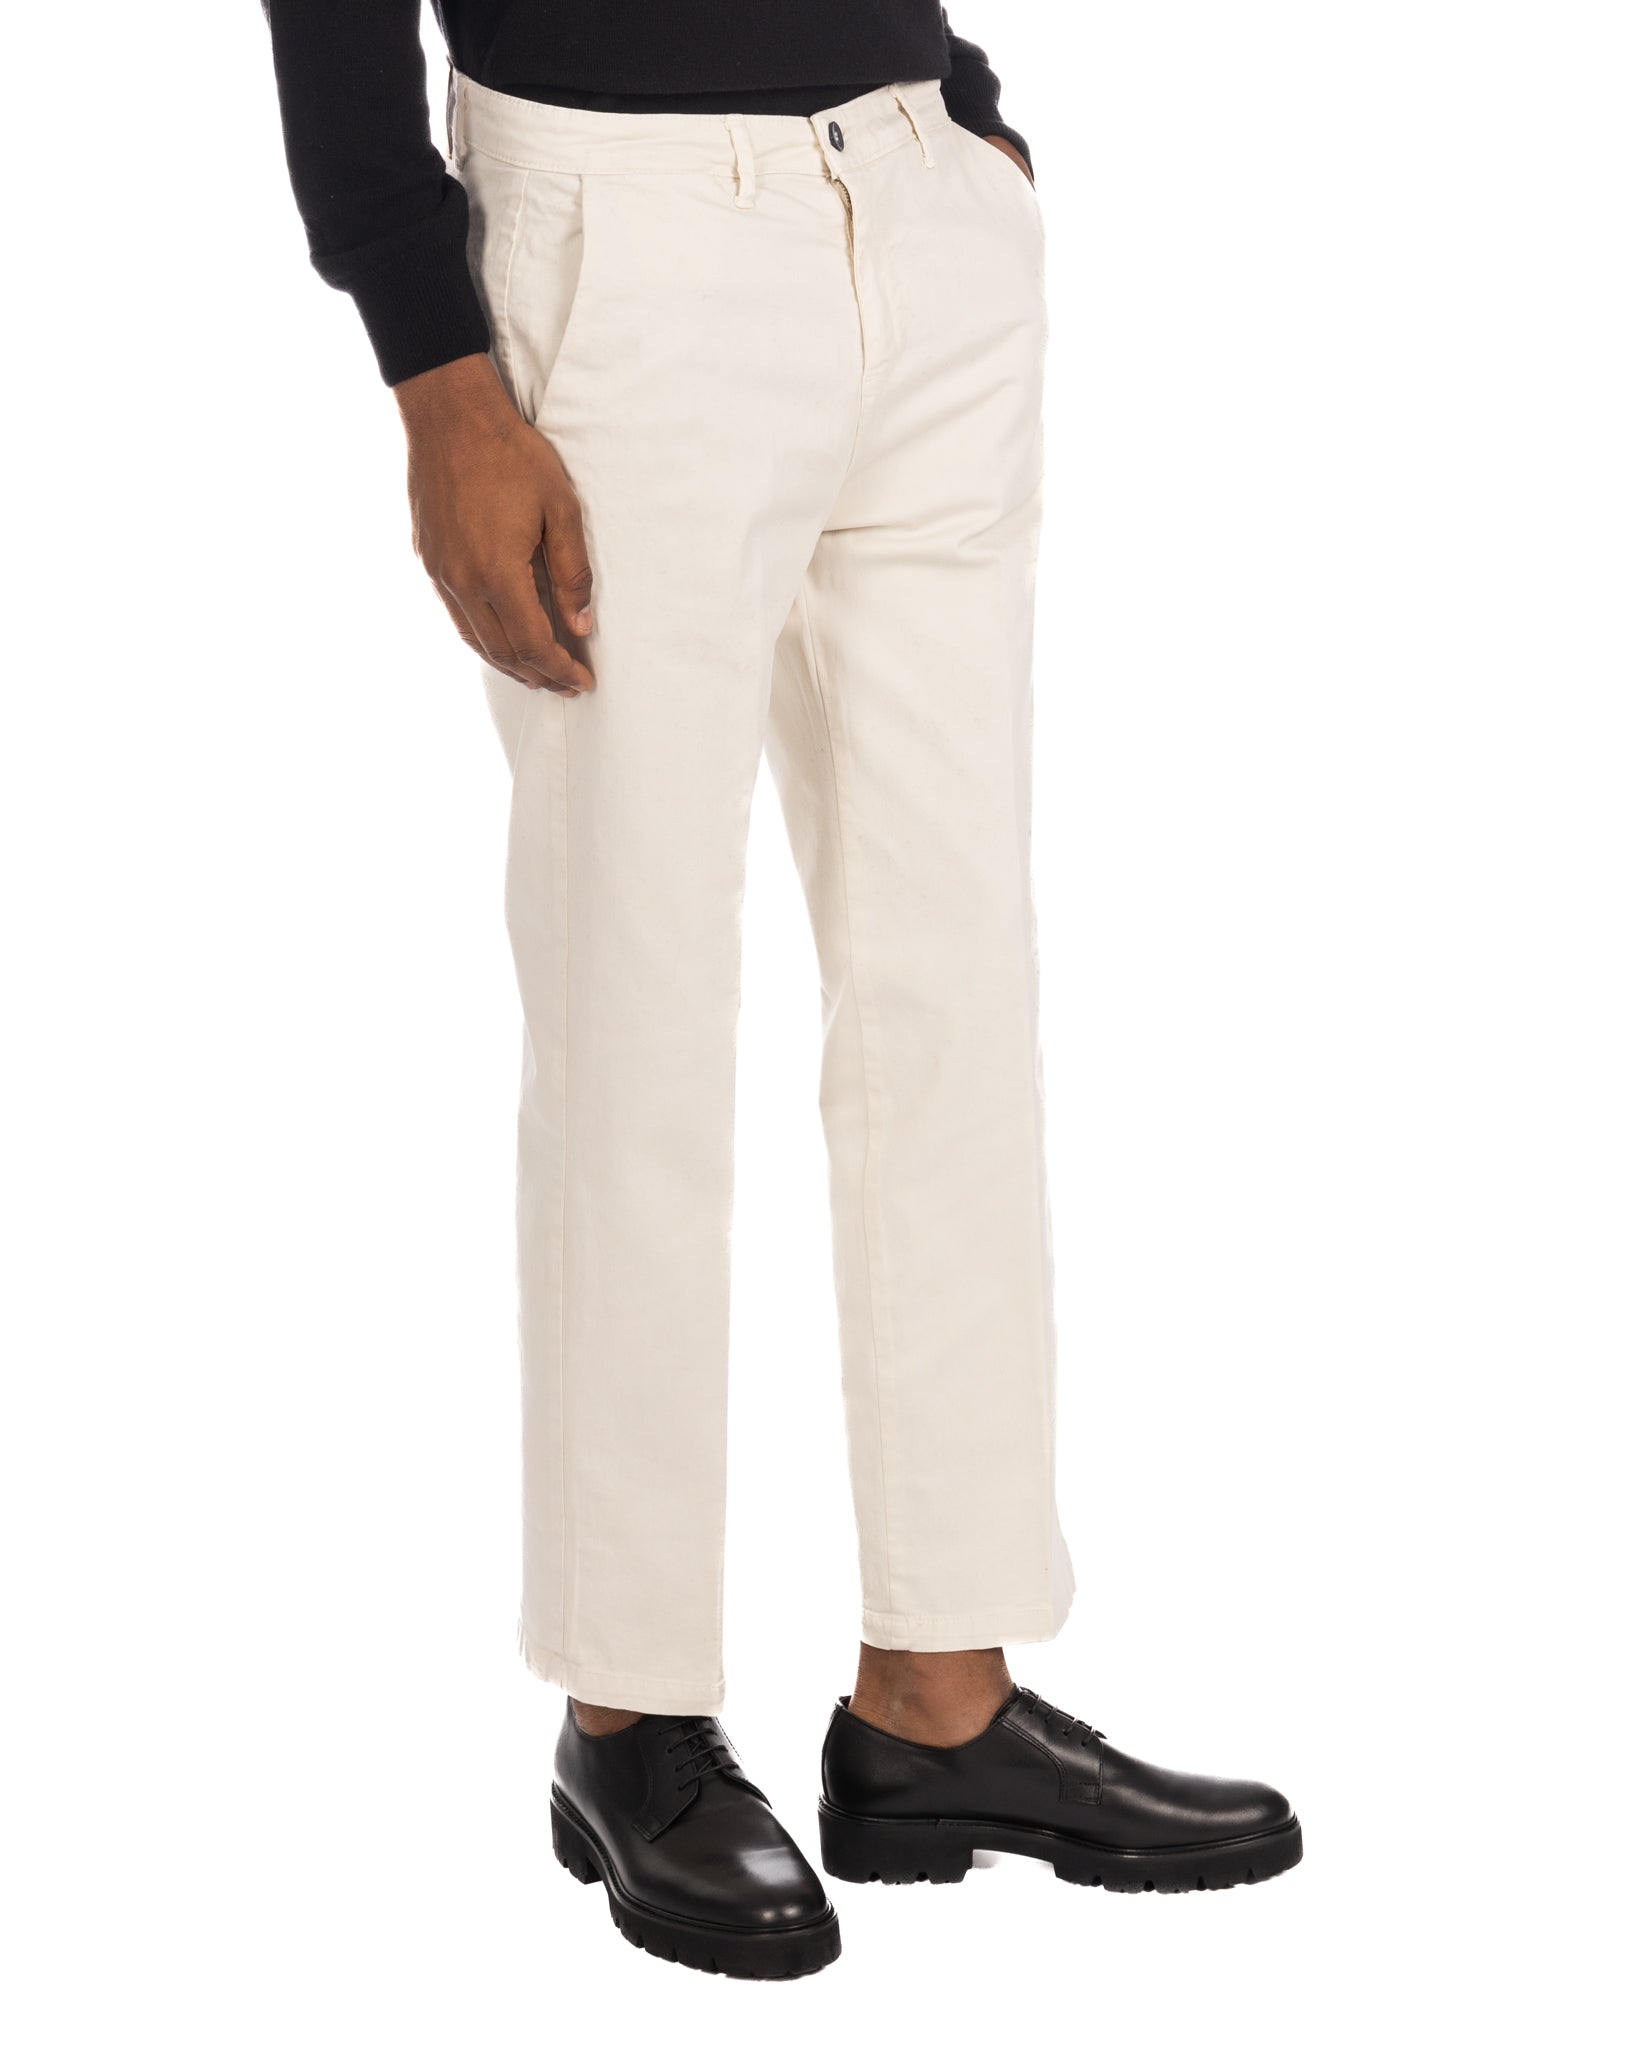 Sorrento - cream wide bottom trousers